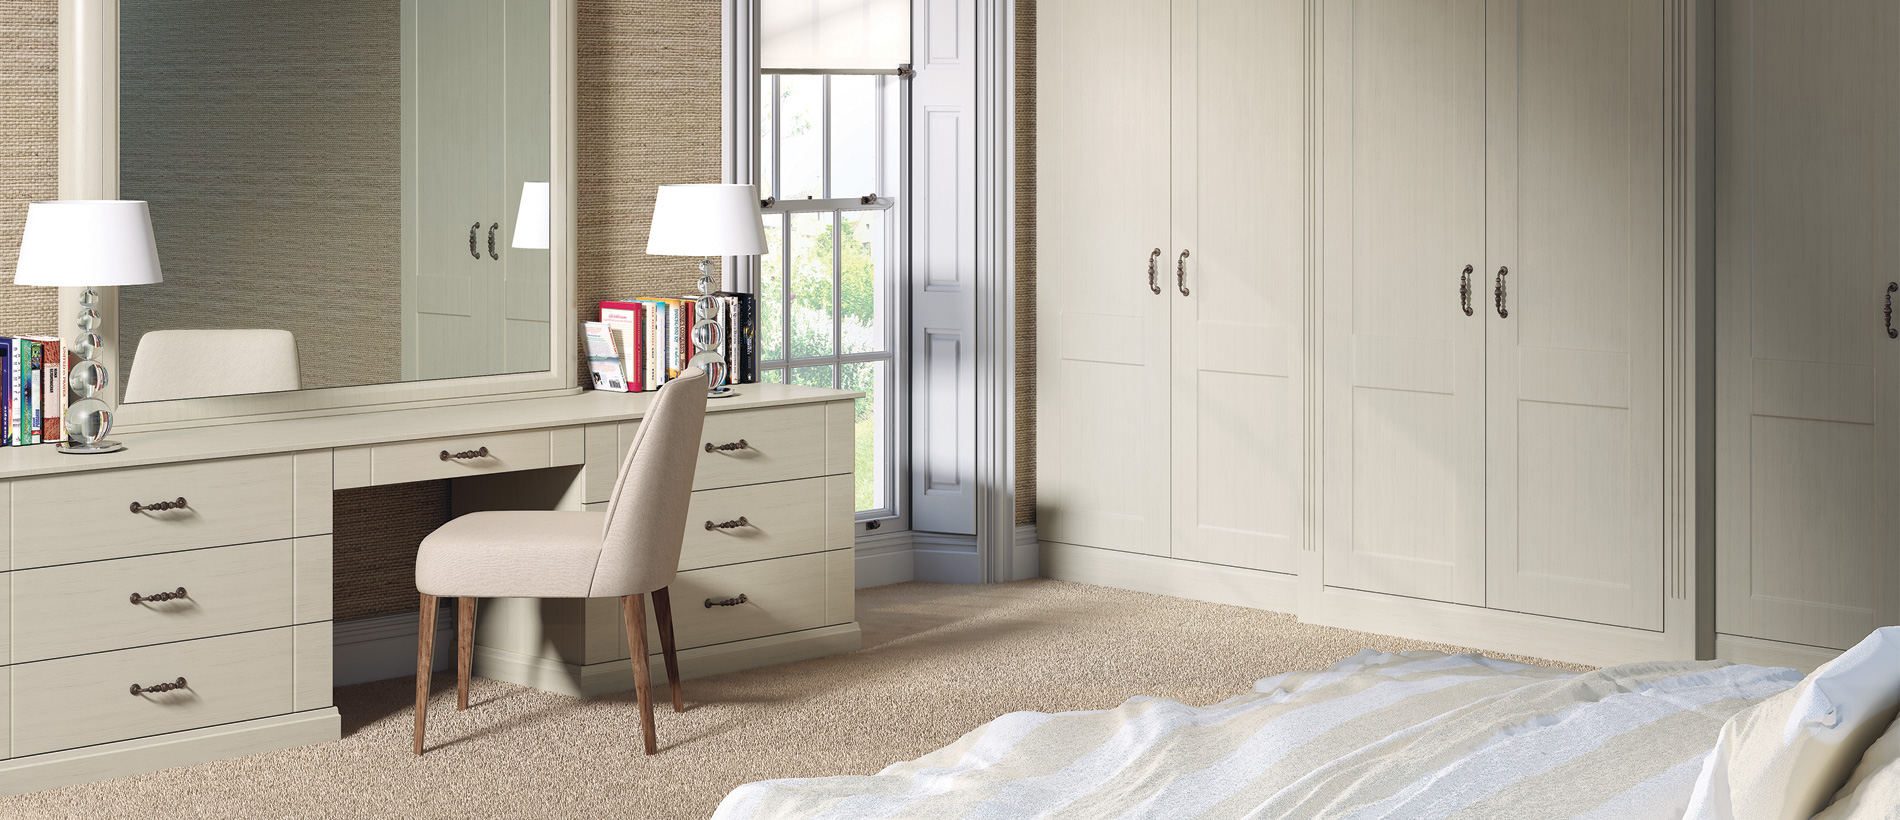 Bespoke Bedroom Furniture | Wardrobes and Bedrooms